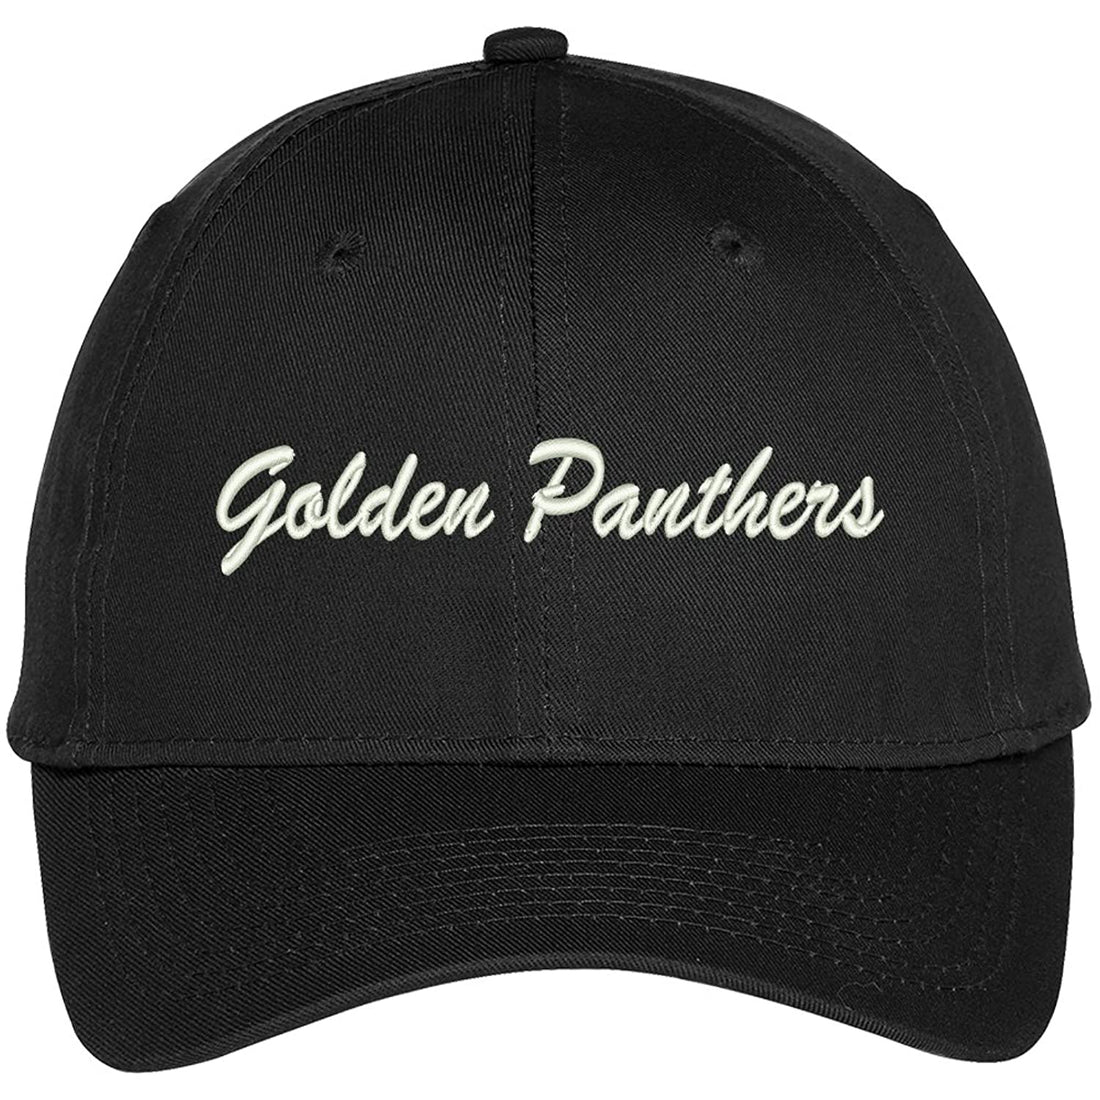 Trendy Apparel Shop Golden Panthers Embroidered Team Nickname Mascot Cap - Khaki